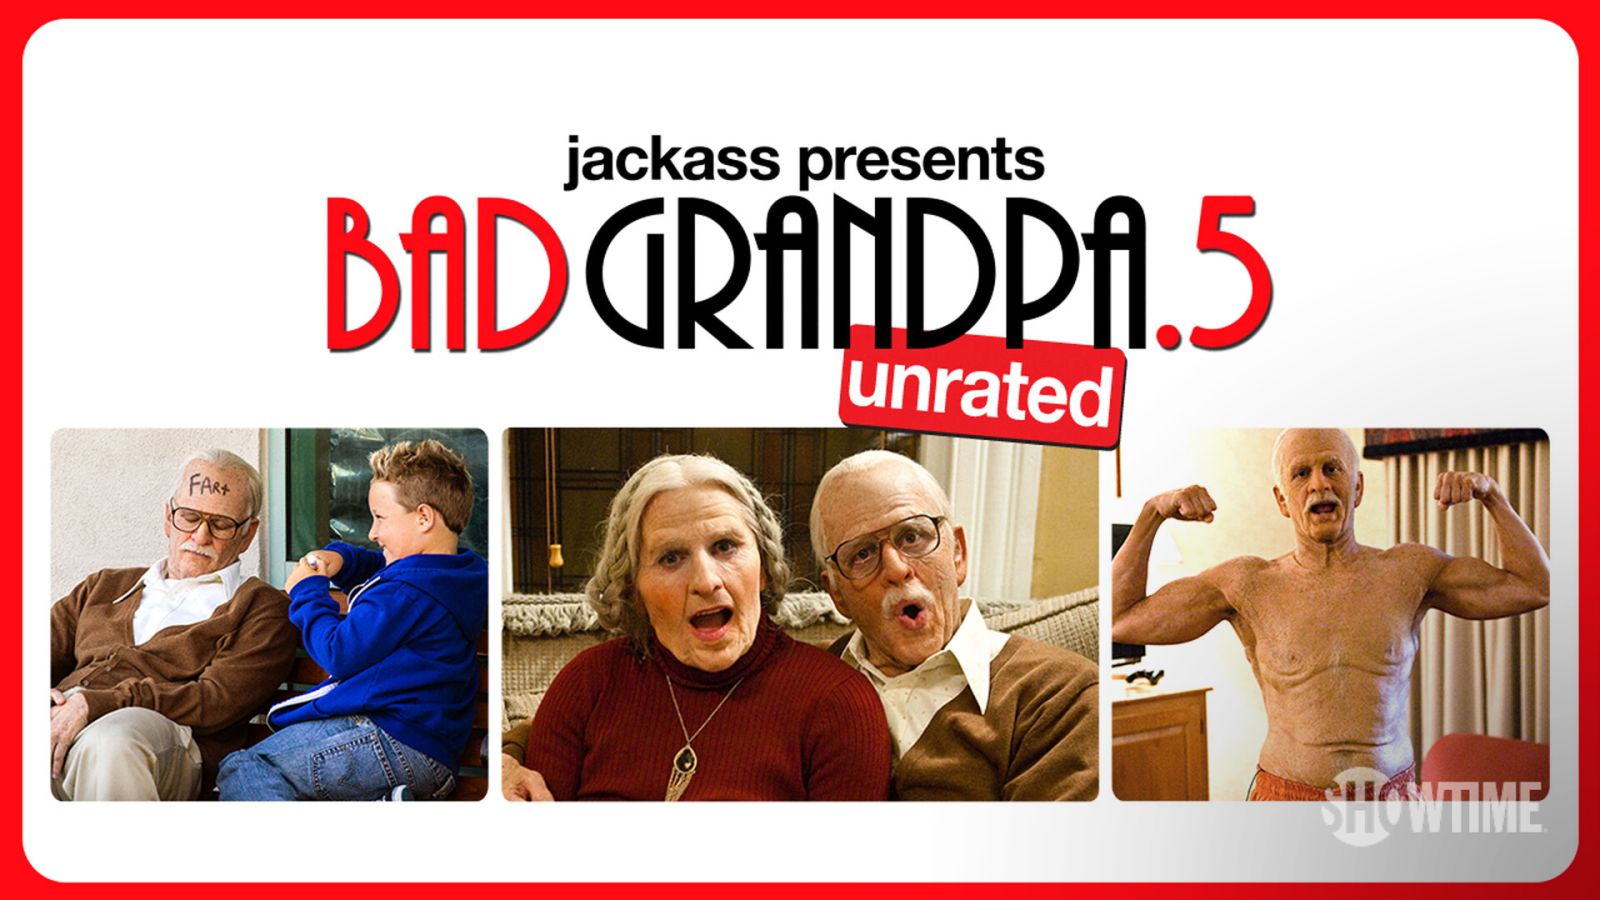 Bad grandpa .5 - Jackass presents: bad grandpa .5